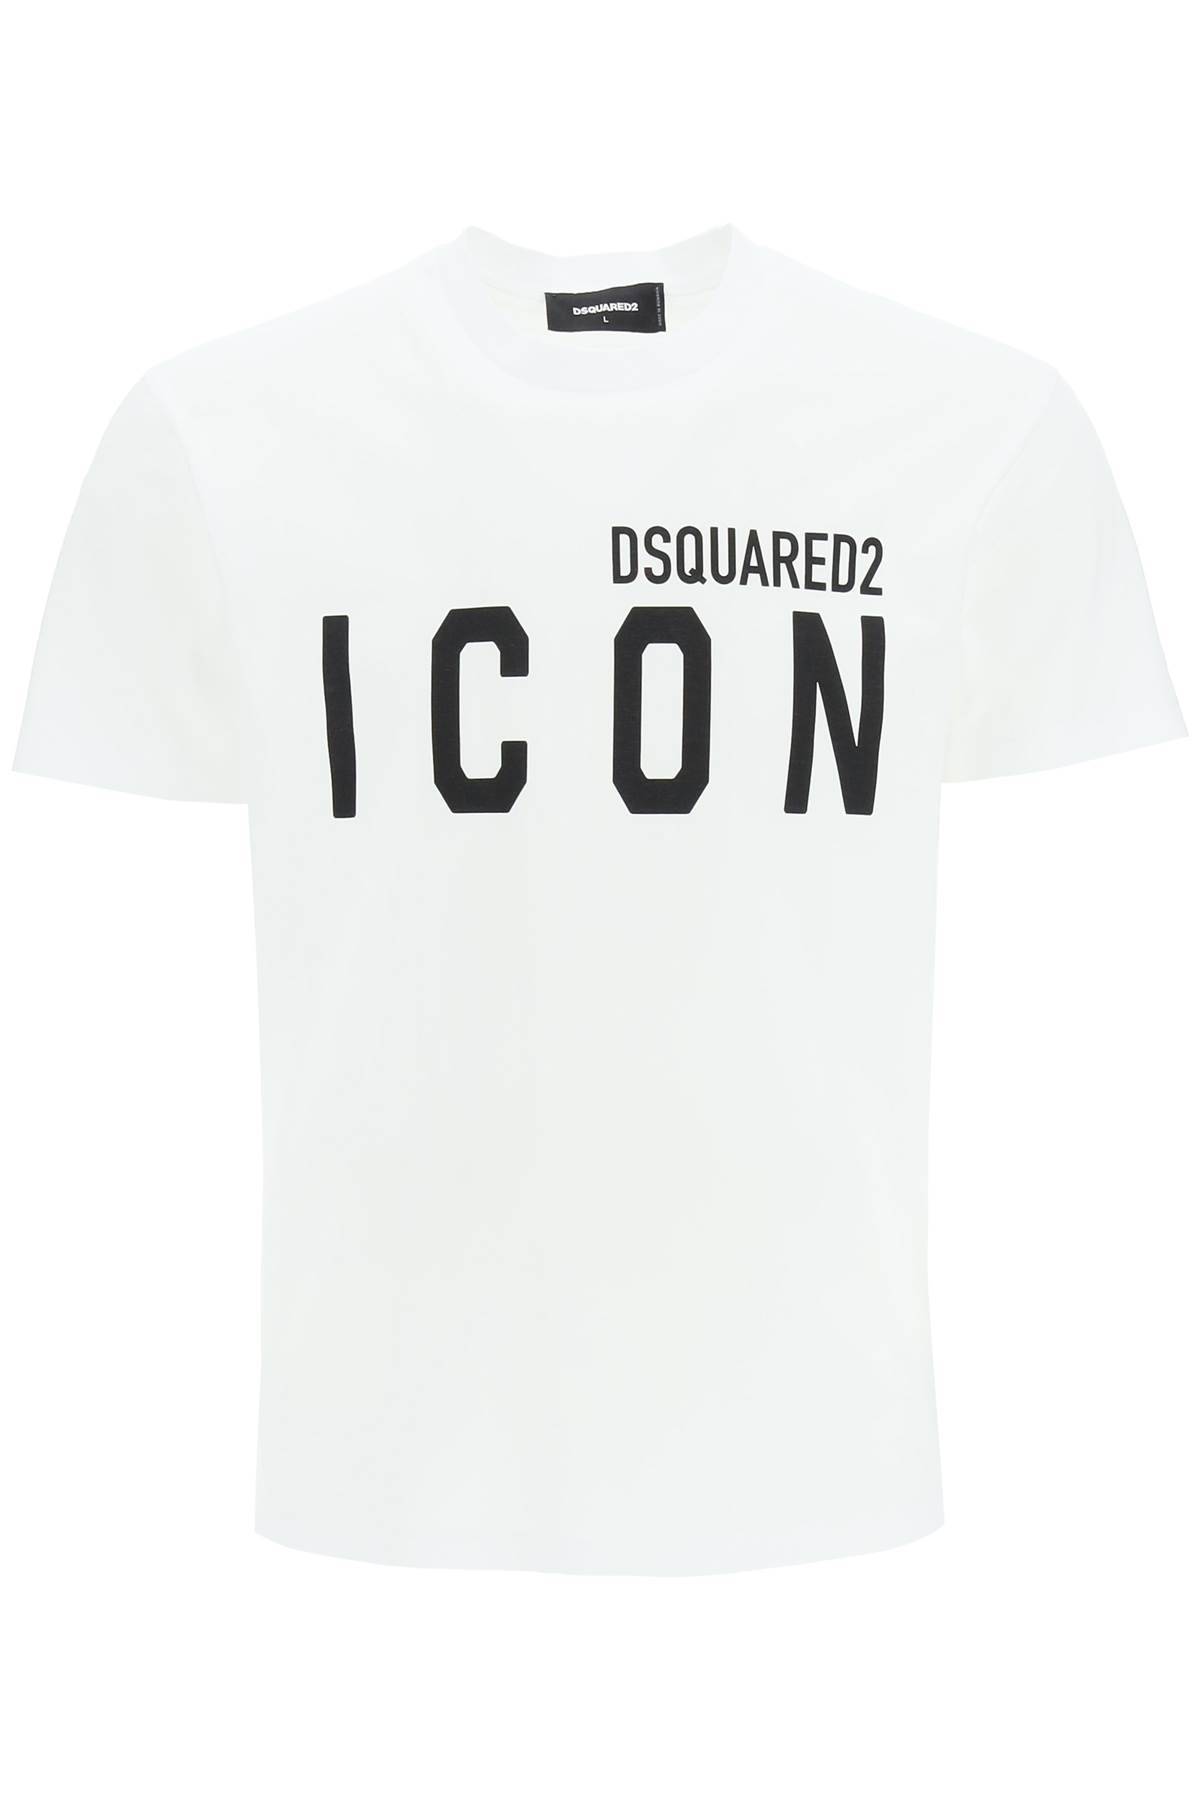 Dsquared2 DSQUARED2 icon logo t-shirt